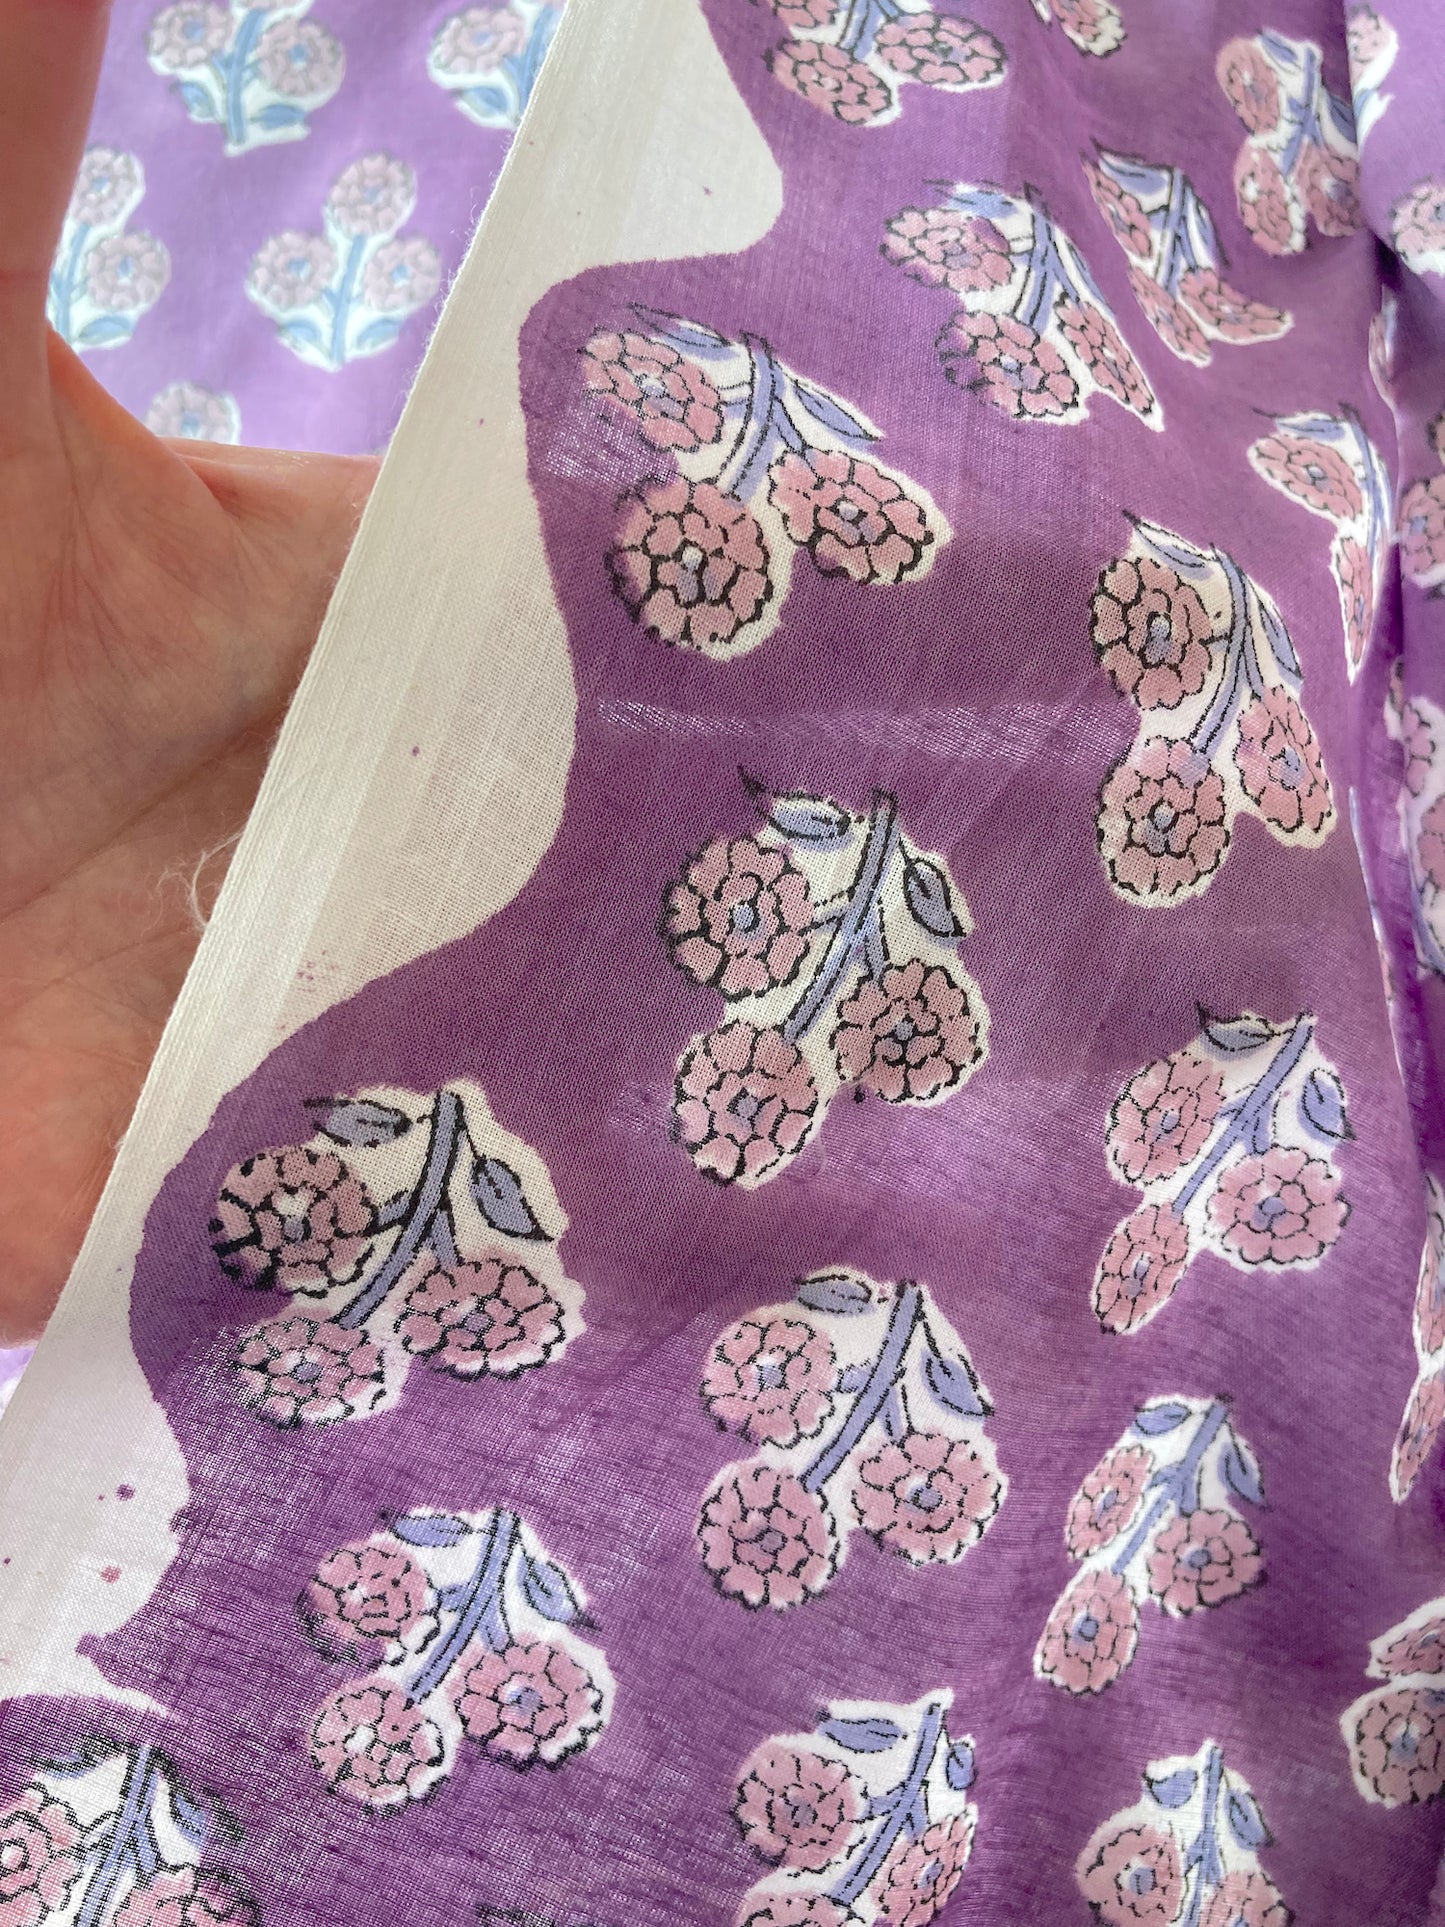 Hand Block Printed Cotton Fabric #185-25 Purple